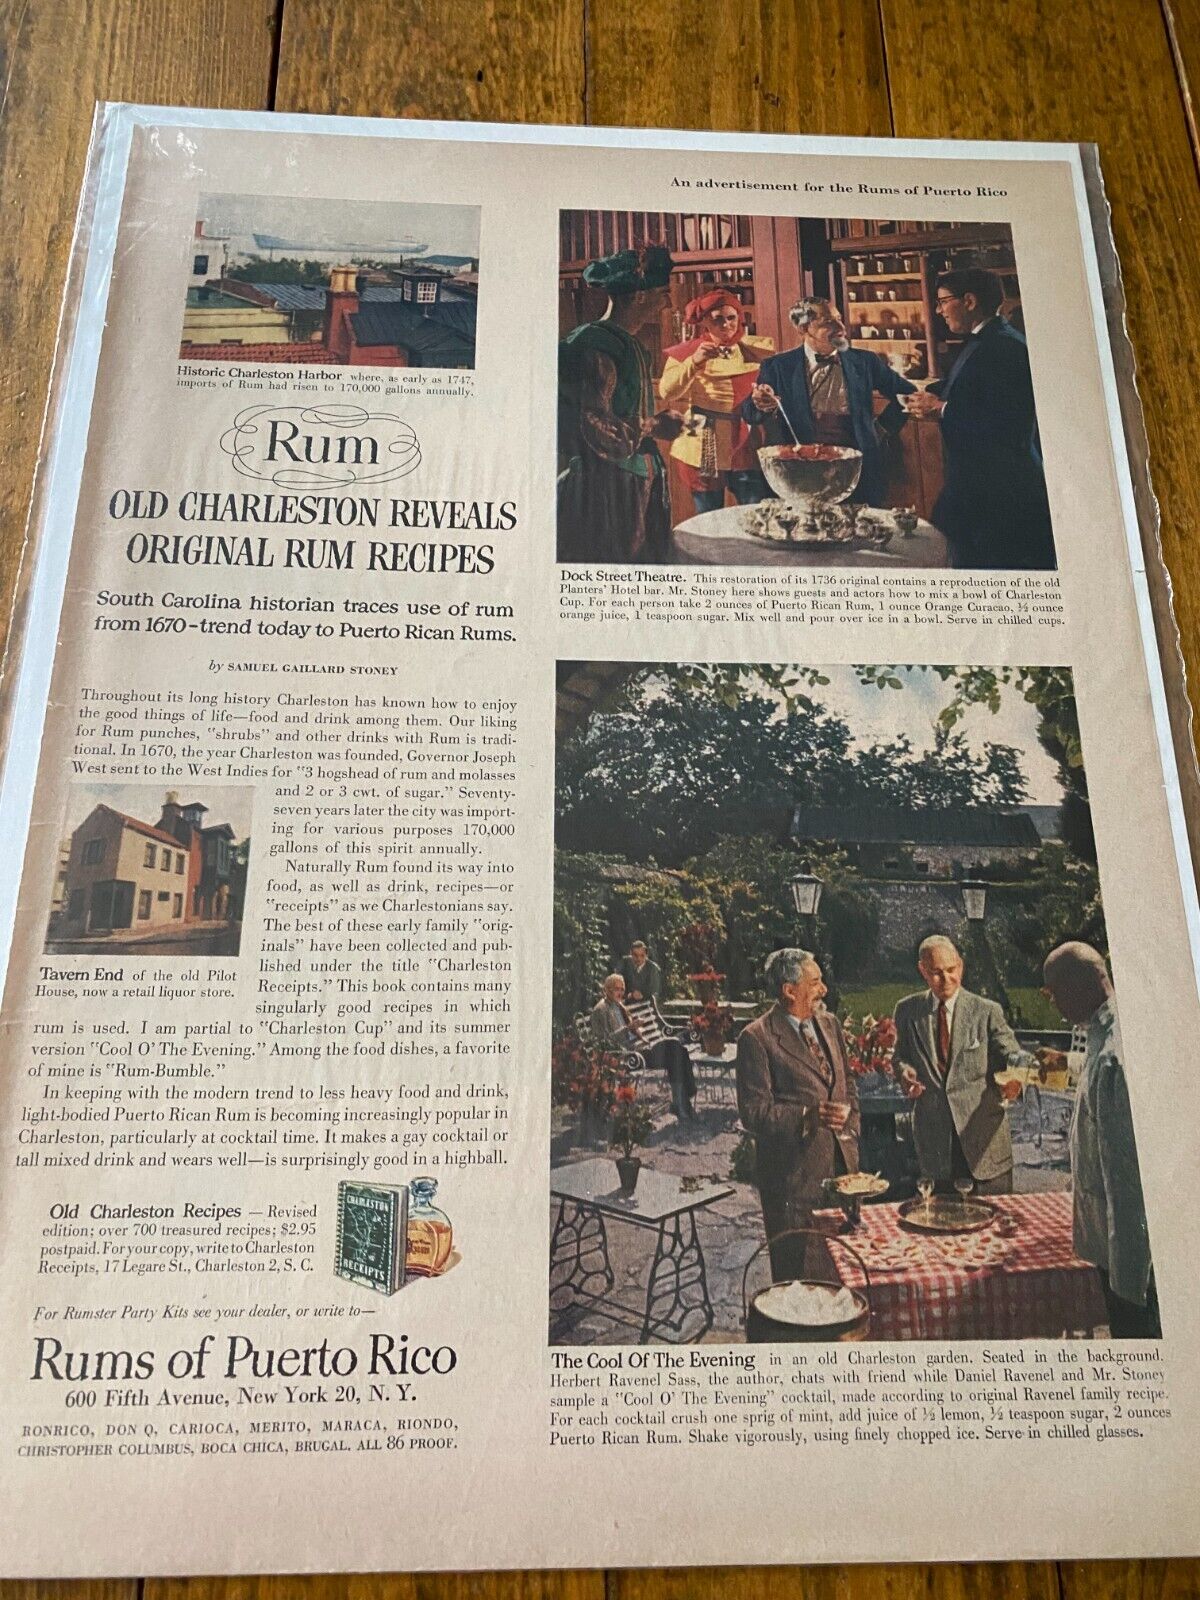 Vintage 1952 Rums Of Puerto Rico Old Charleston Reveals Rum Recipes ad